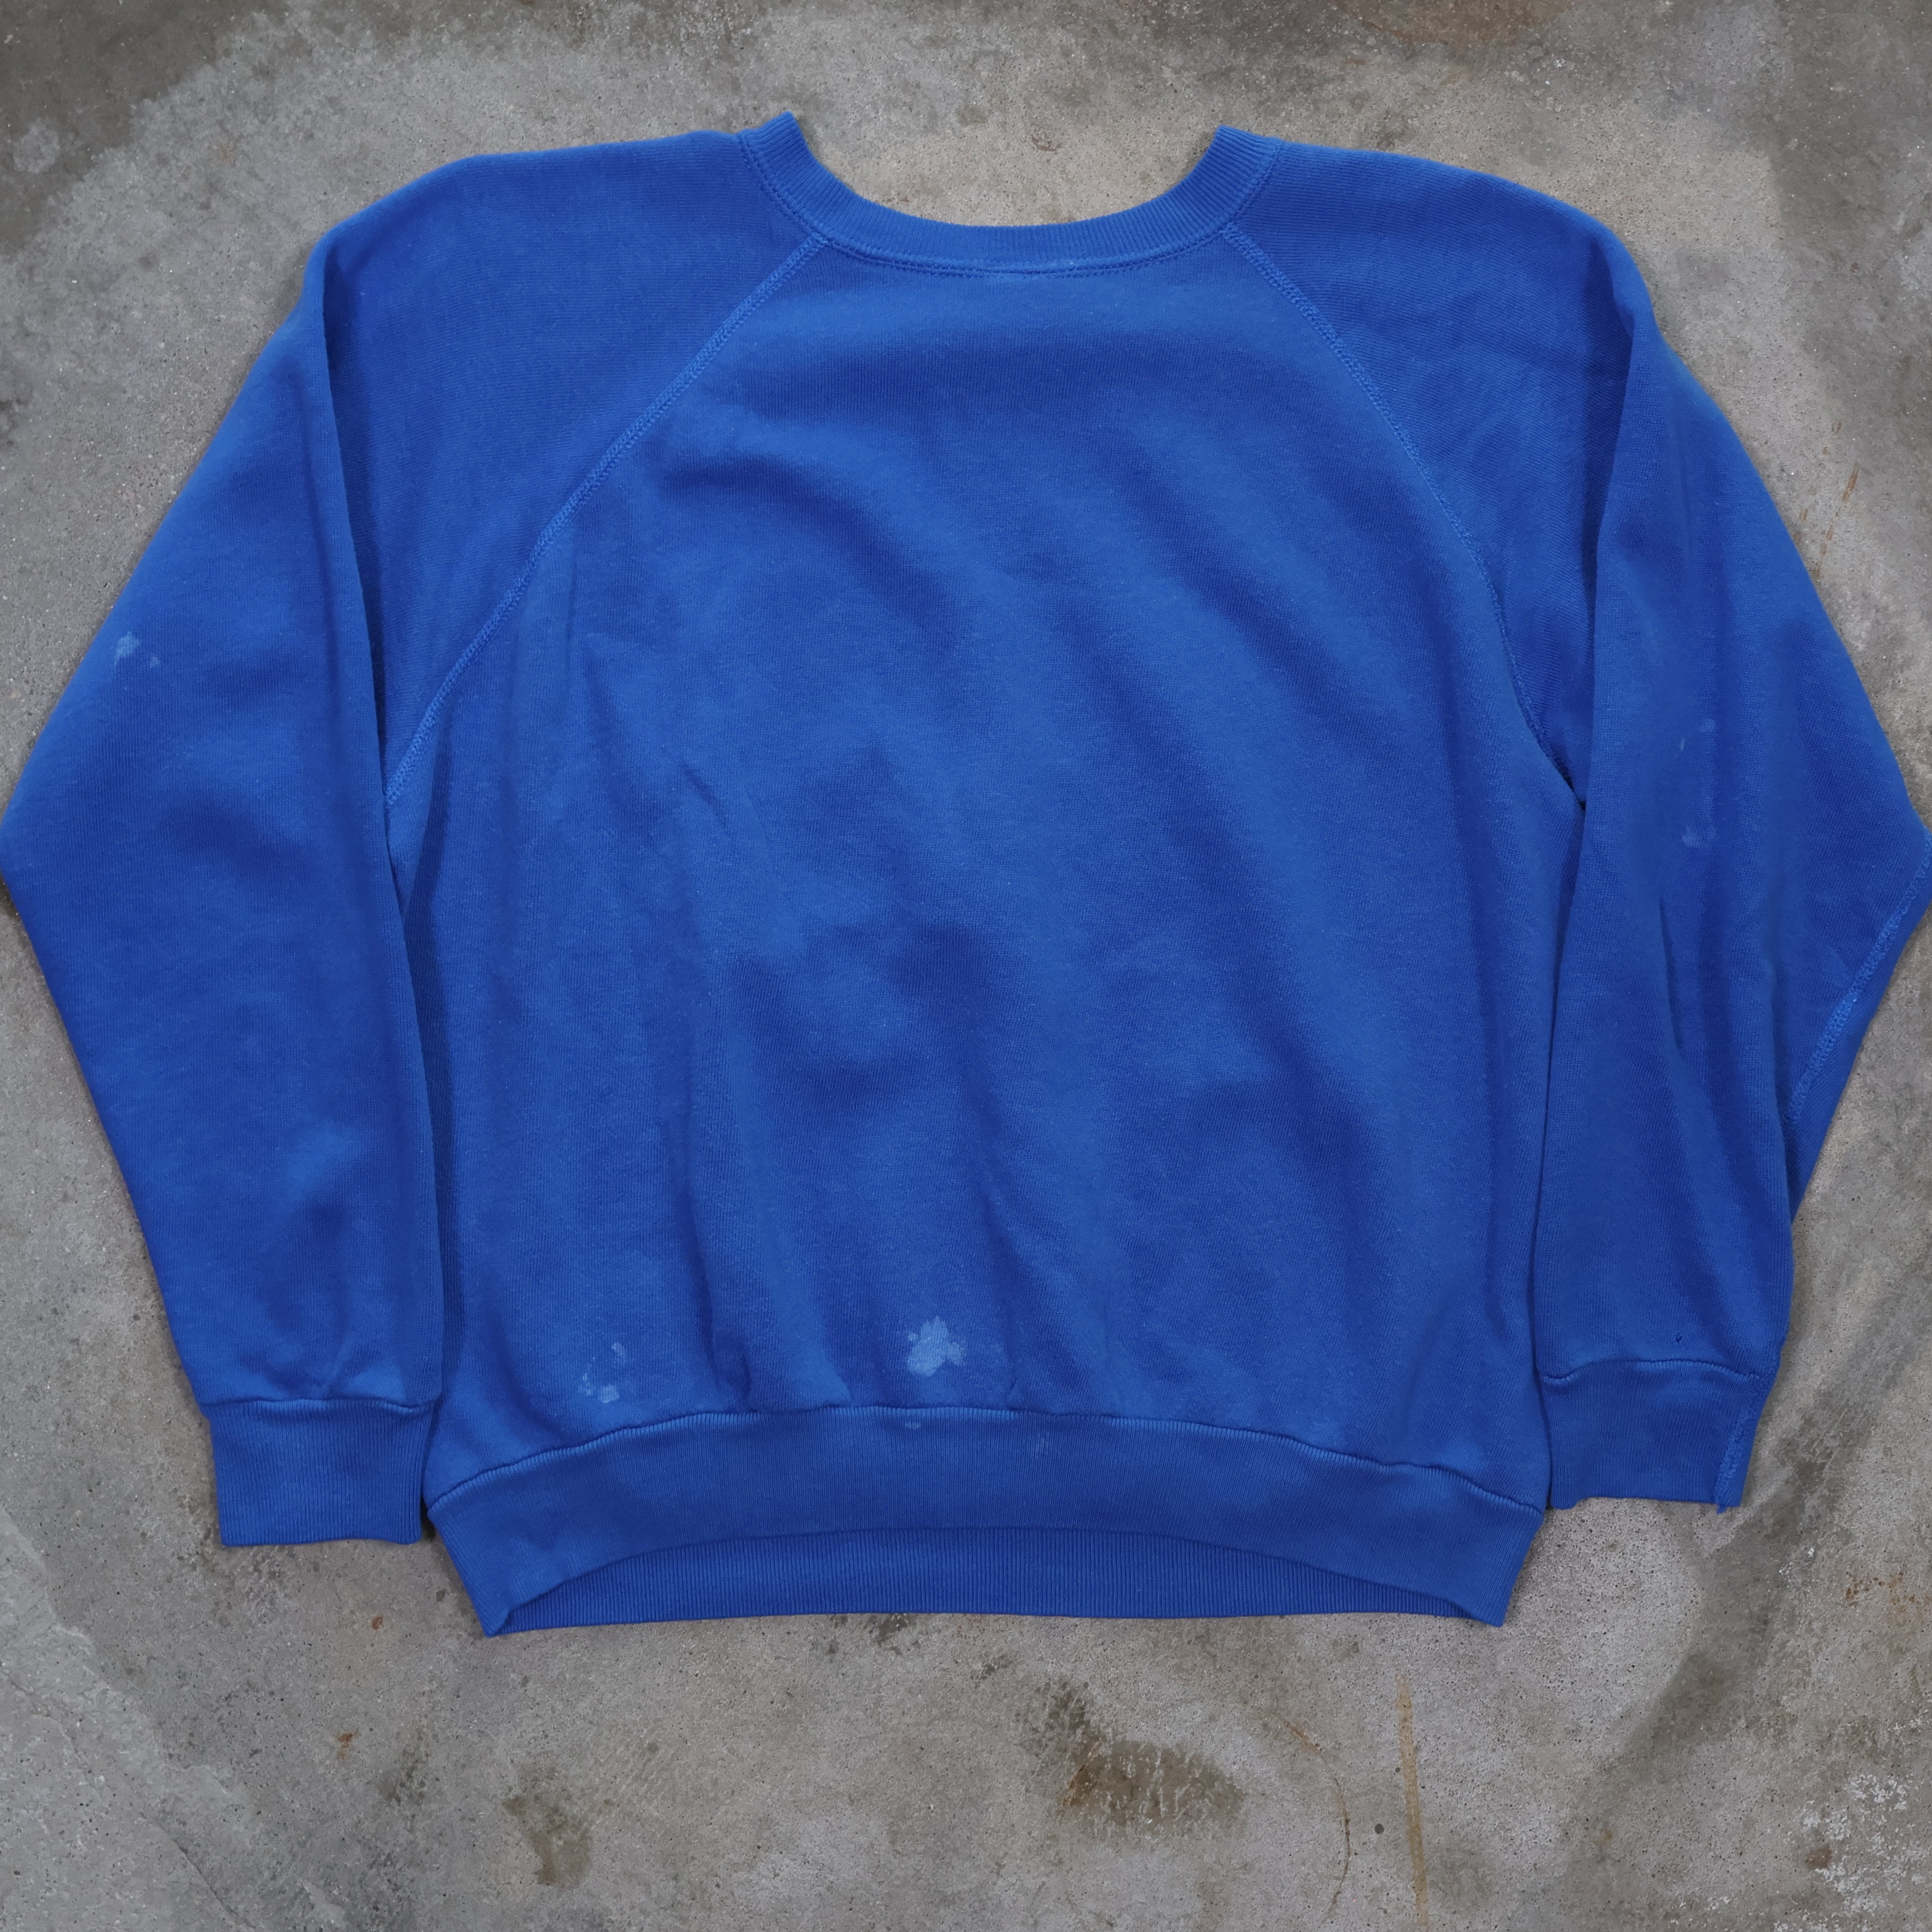 New York Mets Sweatshirt 80s (Medium)